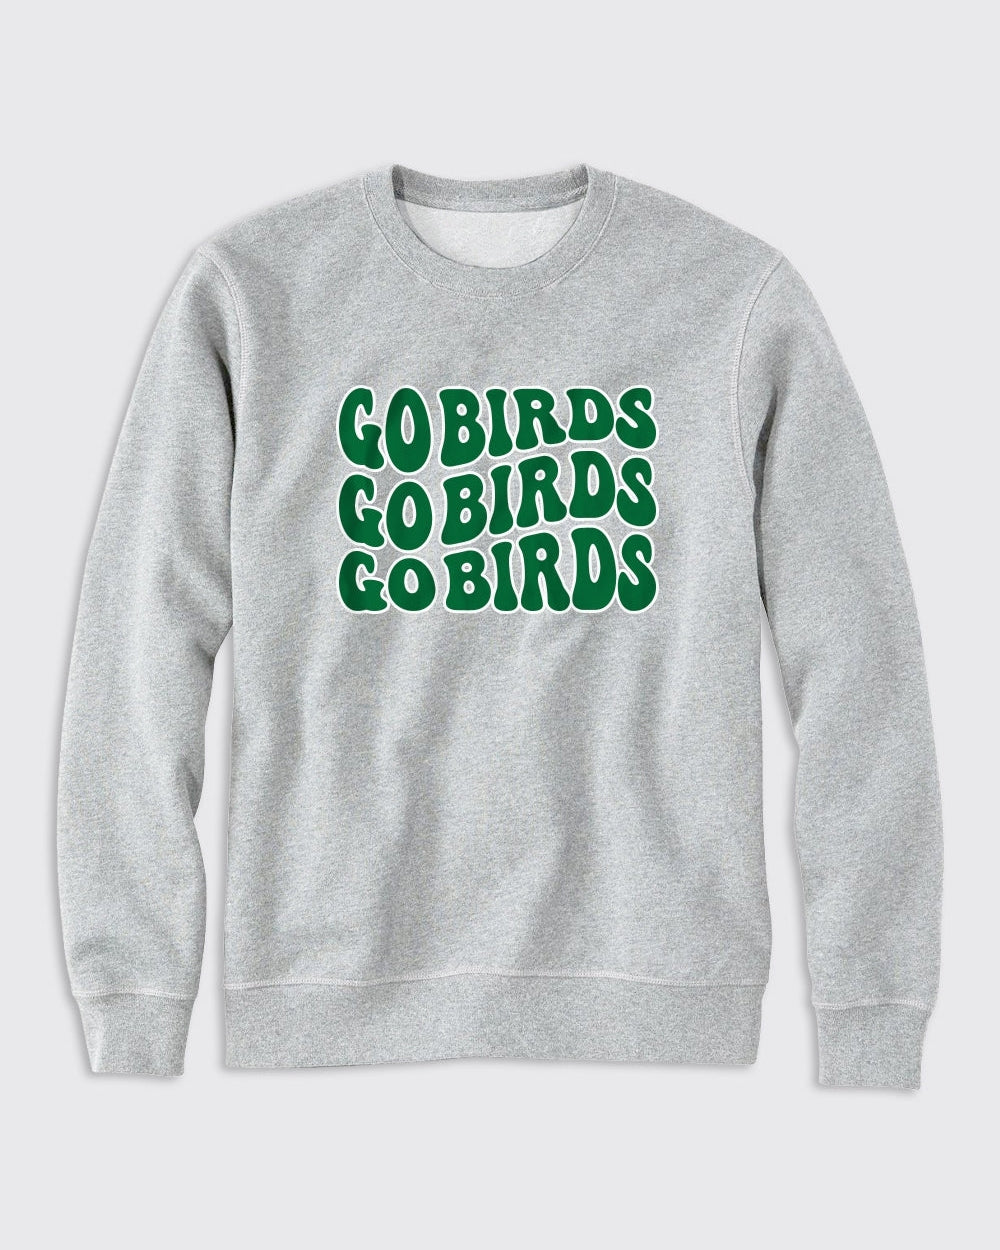 Philly Sports Shirts Go Birds Crewneck Sweatshirt Grey Heather / S